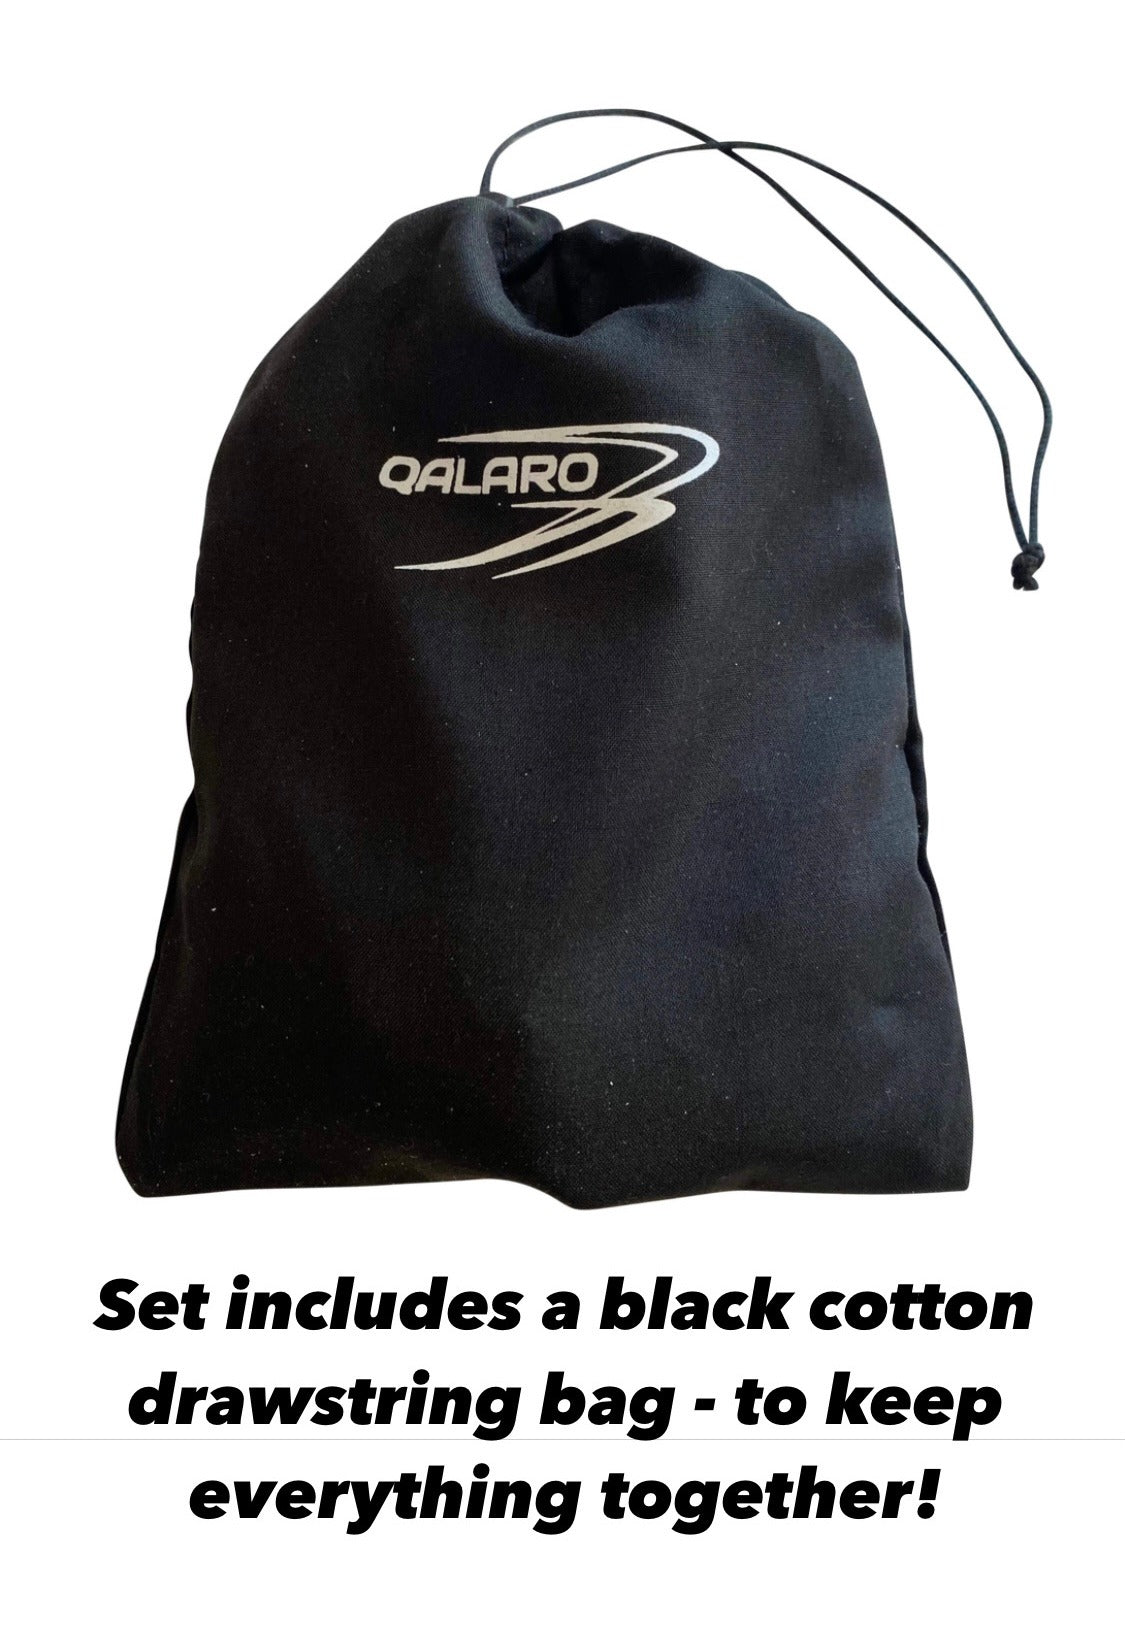 QALARO Velcro Grips for Girls Gymnastics, 10cm Wristbands and Grip Bag